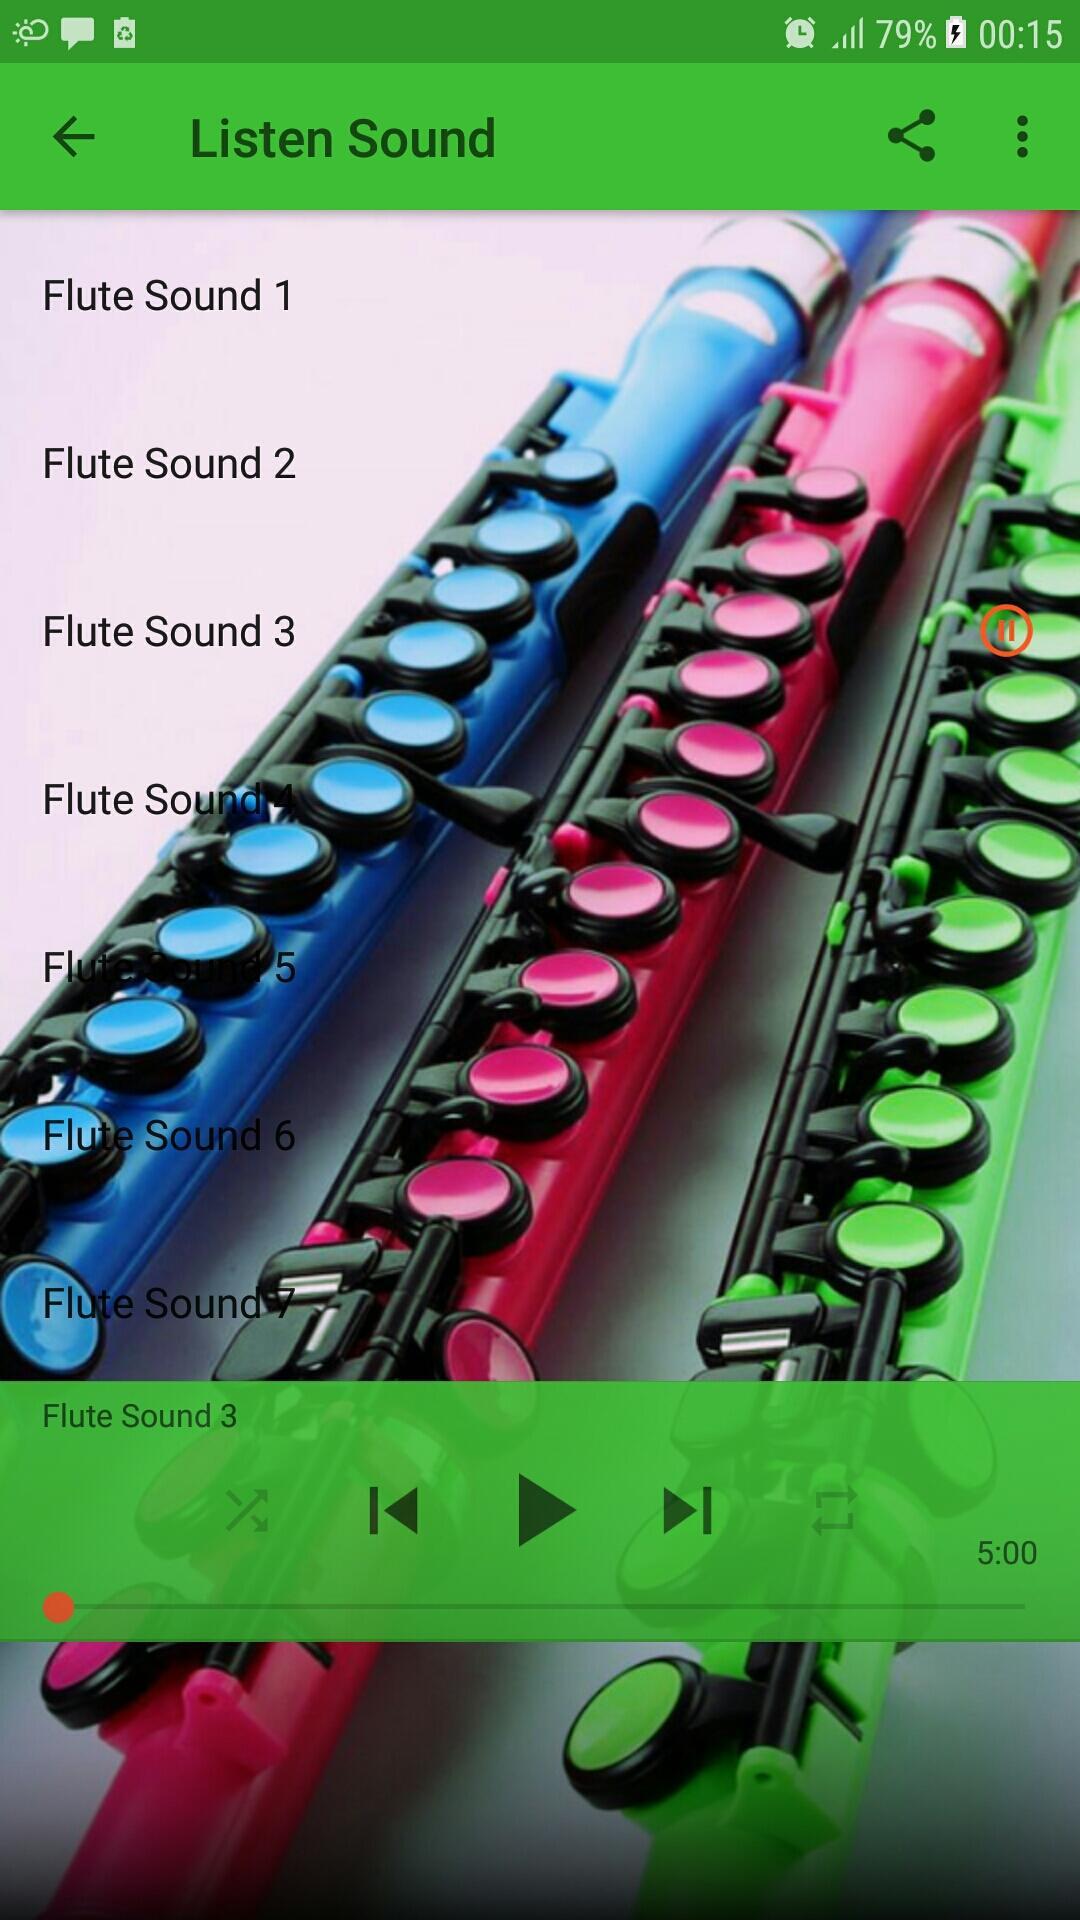 Flute sound. Флейта звучание. Звук флейты. Скрин флейты. Звук флейты в майнкрафт.